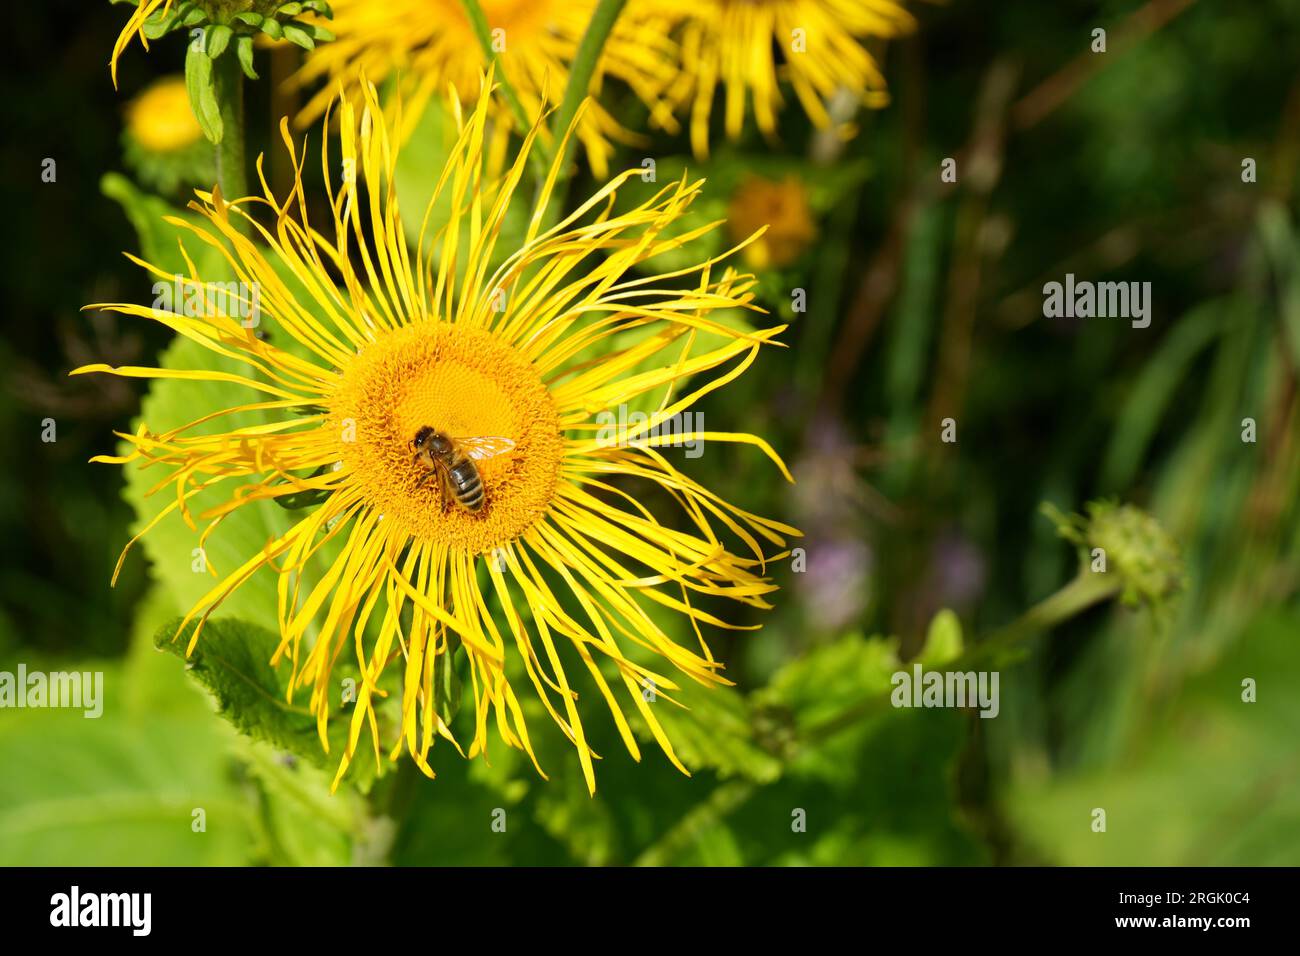 Yellow Oxeye flowers (Telekia Speciosa) with Honeybee. Derbyshire, UK Stock Photo